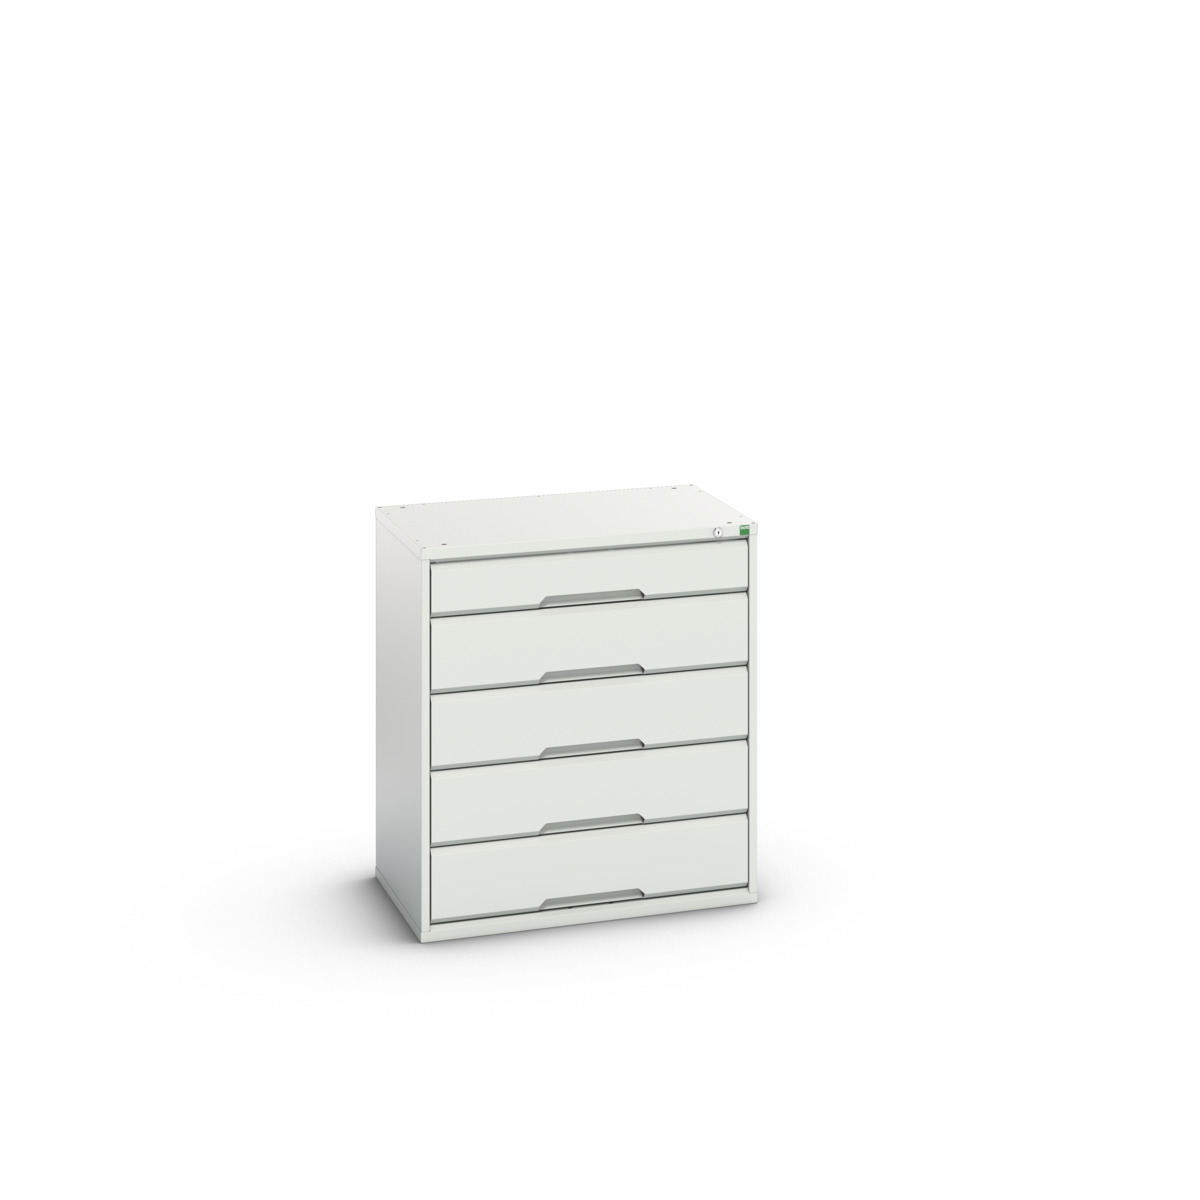 16925417.16 - verso drawer cabinet